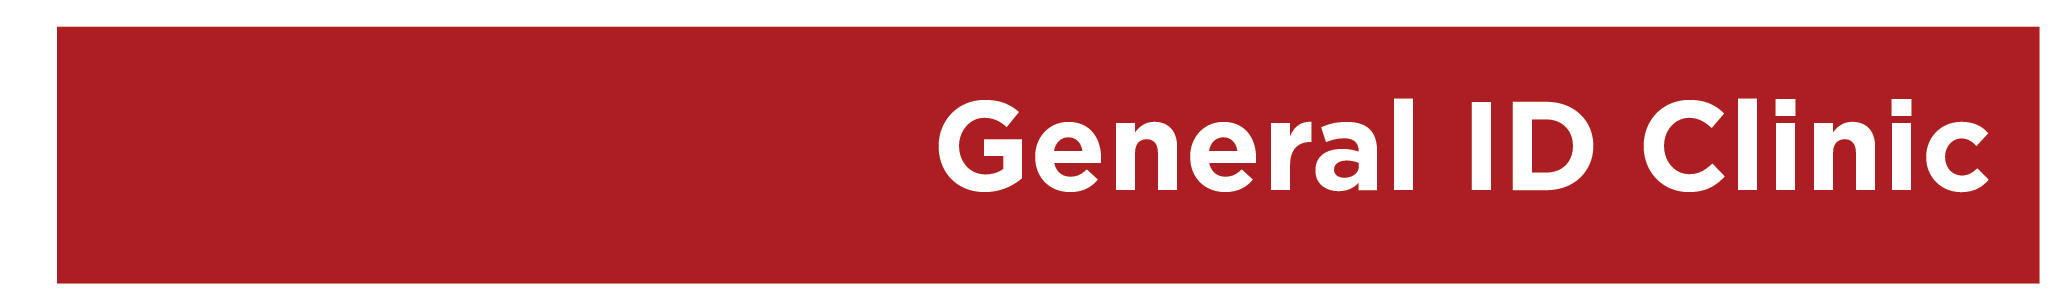 General ID Clinic